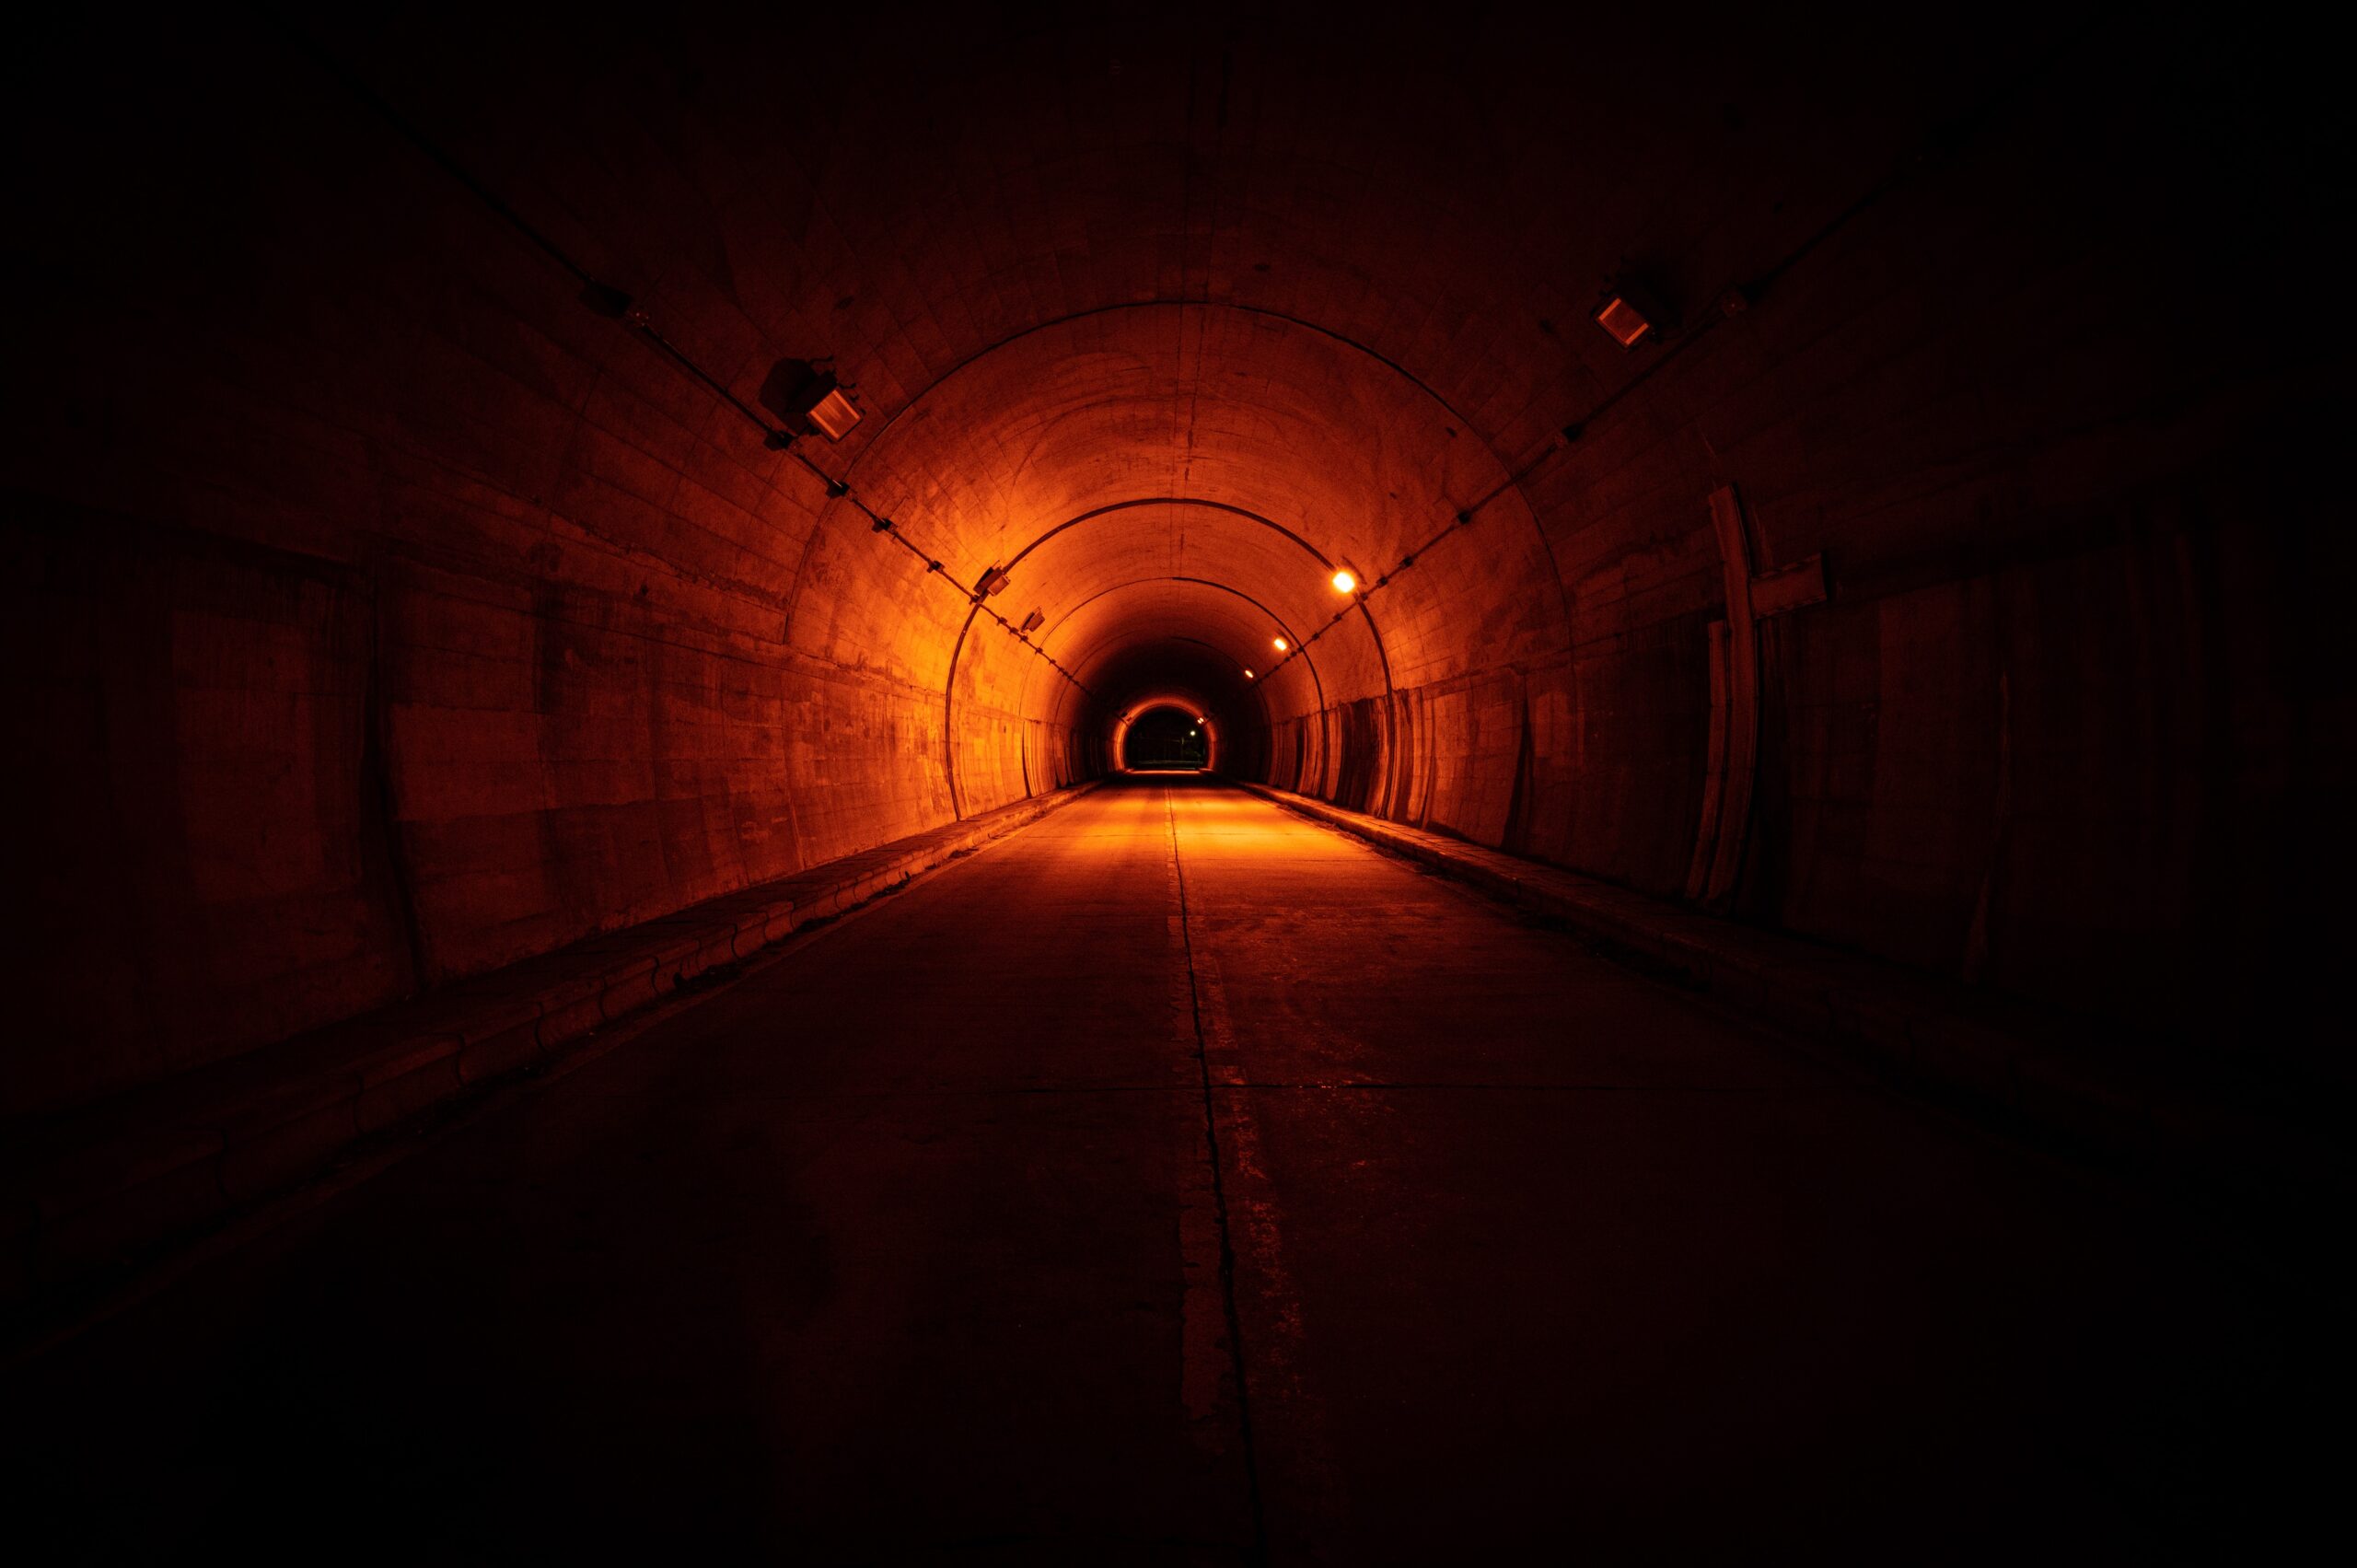 Dark spooky tunnel with low dim orange lights